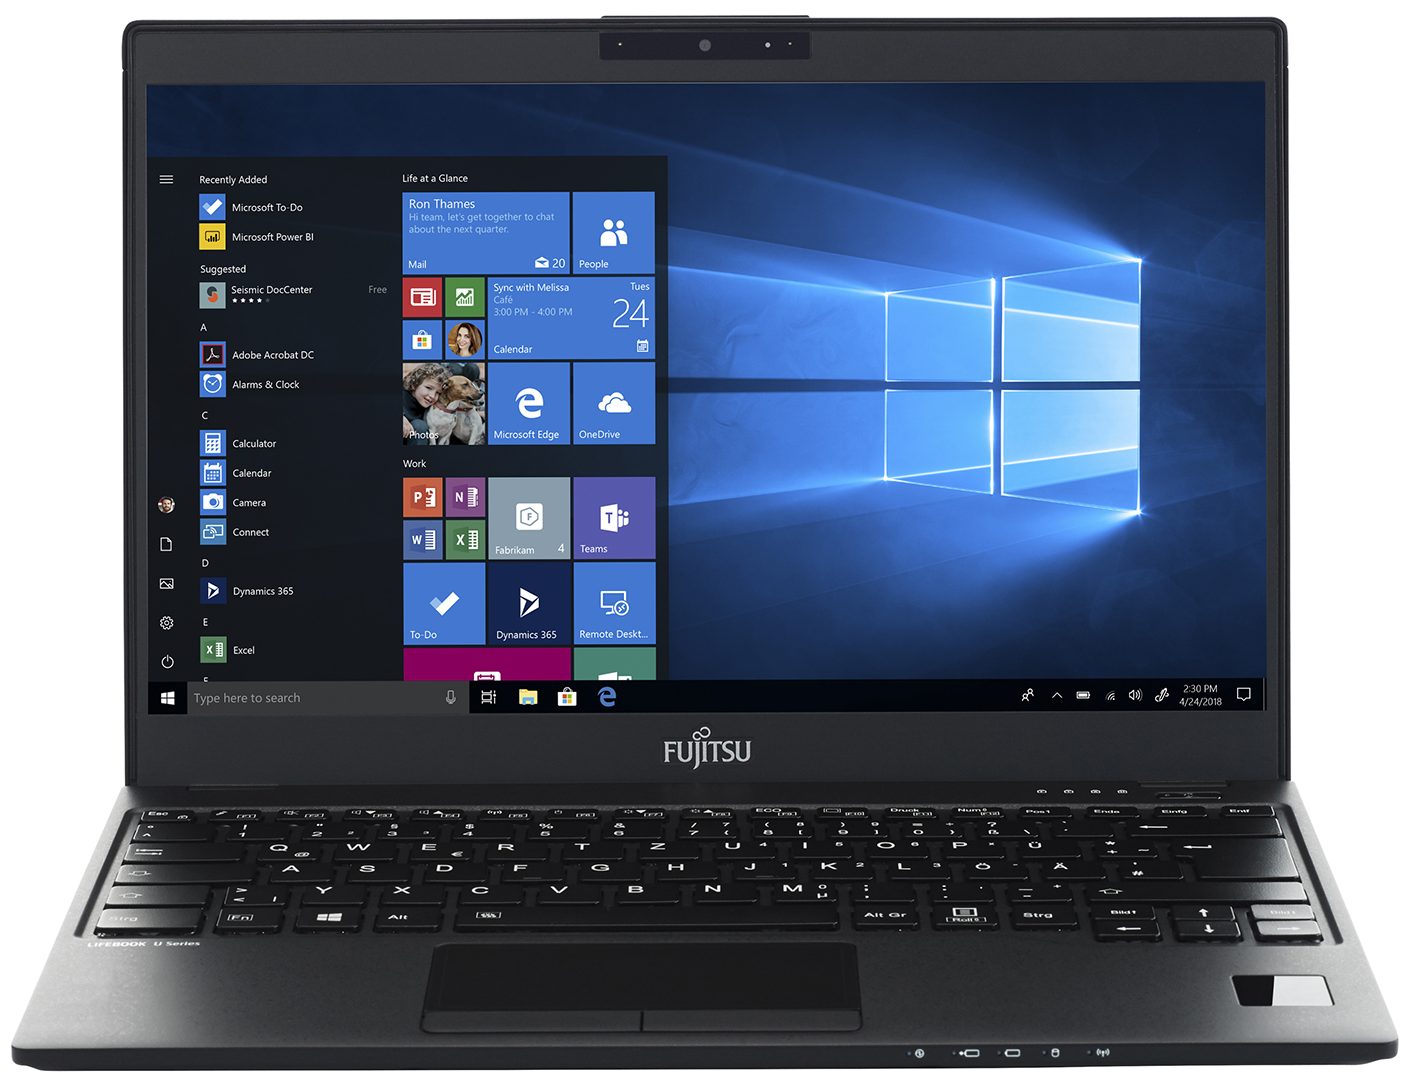 Fujitsu LifeBook U939 - Specs, Tests, and Prices | LaptopMedia.com